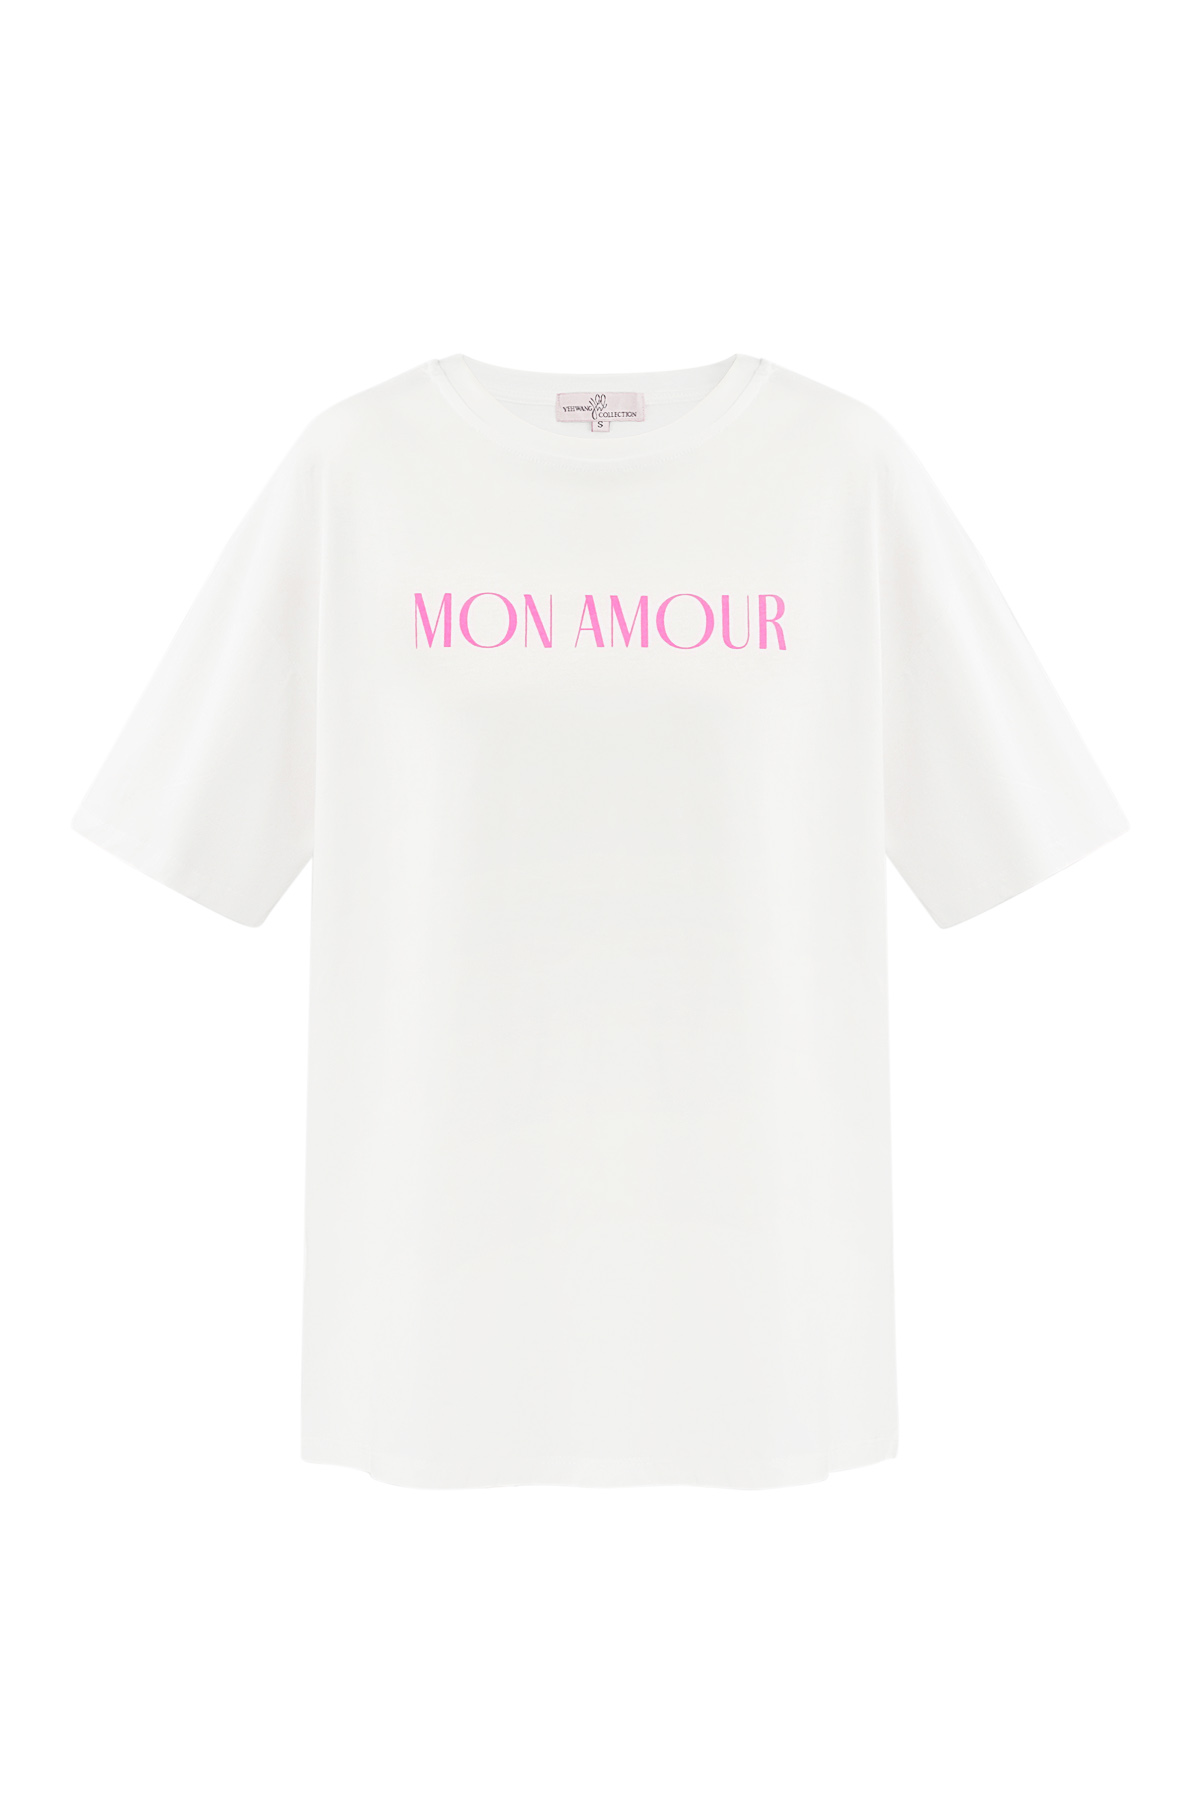 Camiseta mon amour - blanca h5 